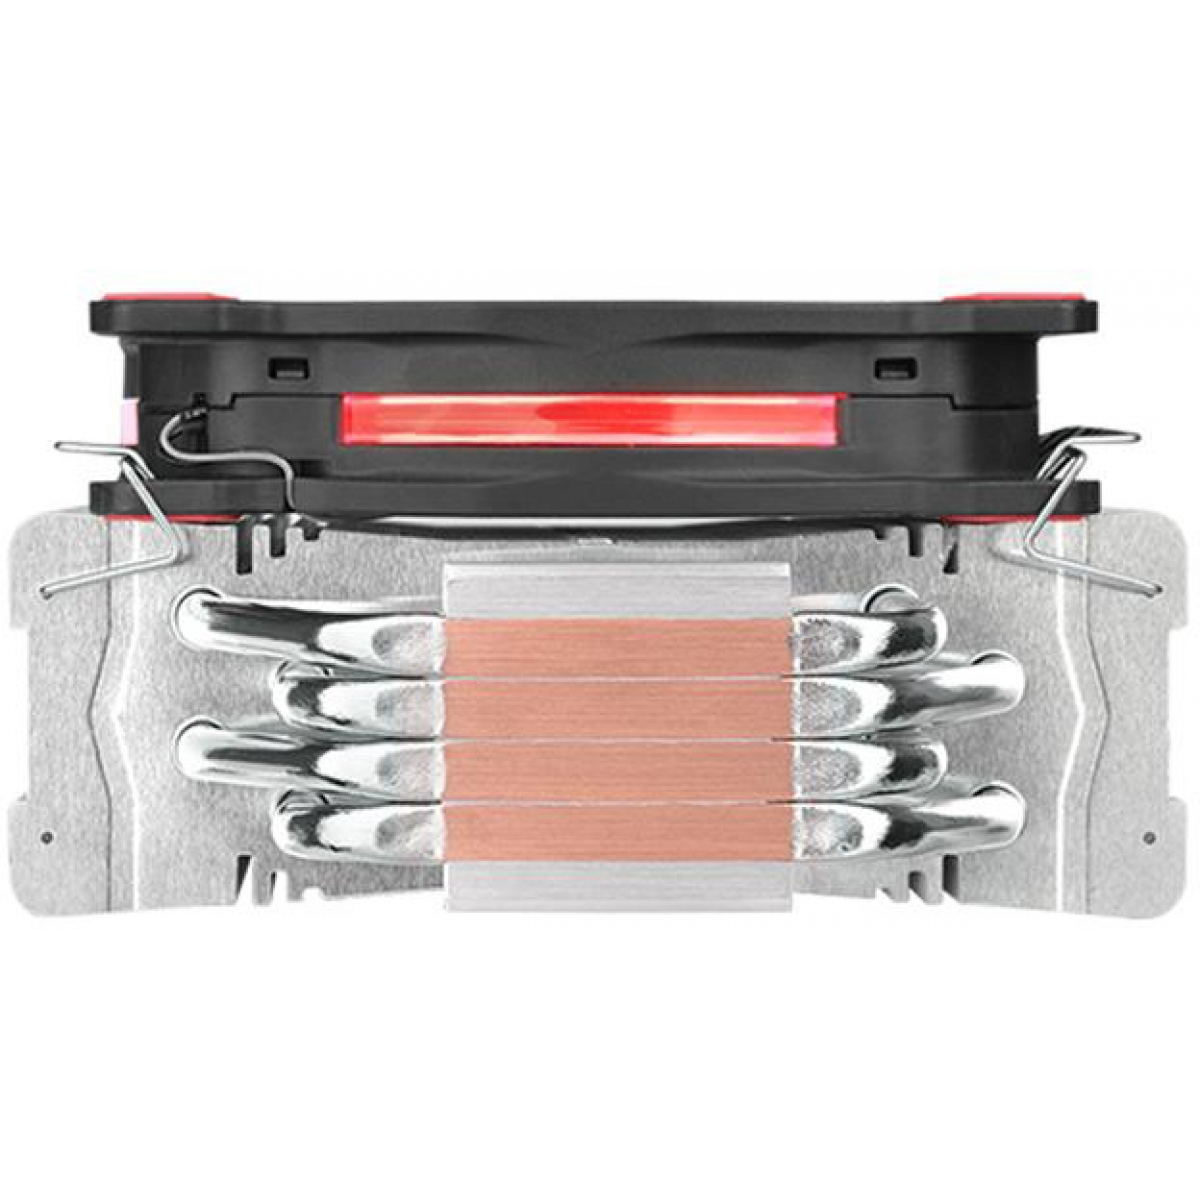 Cooler para Processador Thermaltake Riing Silent 12, Red 120mm, Intel-AMD, CL-P022-AL12RE-A